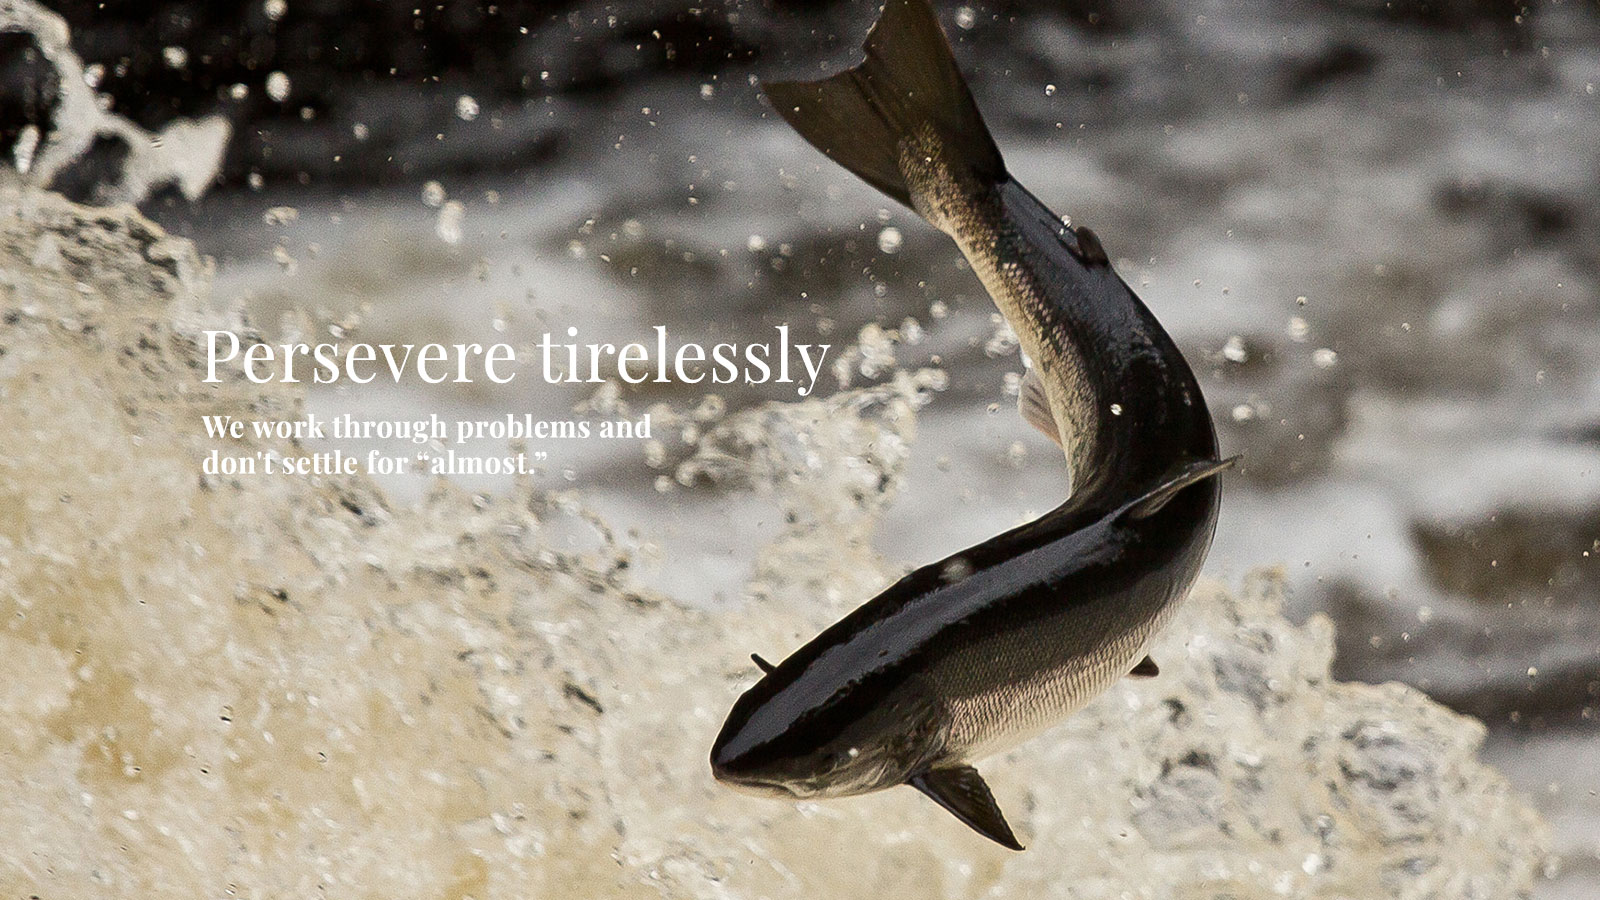 Persevere tirelessly - A fish swimming upstream